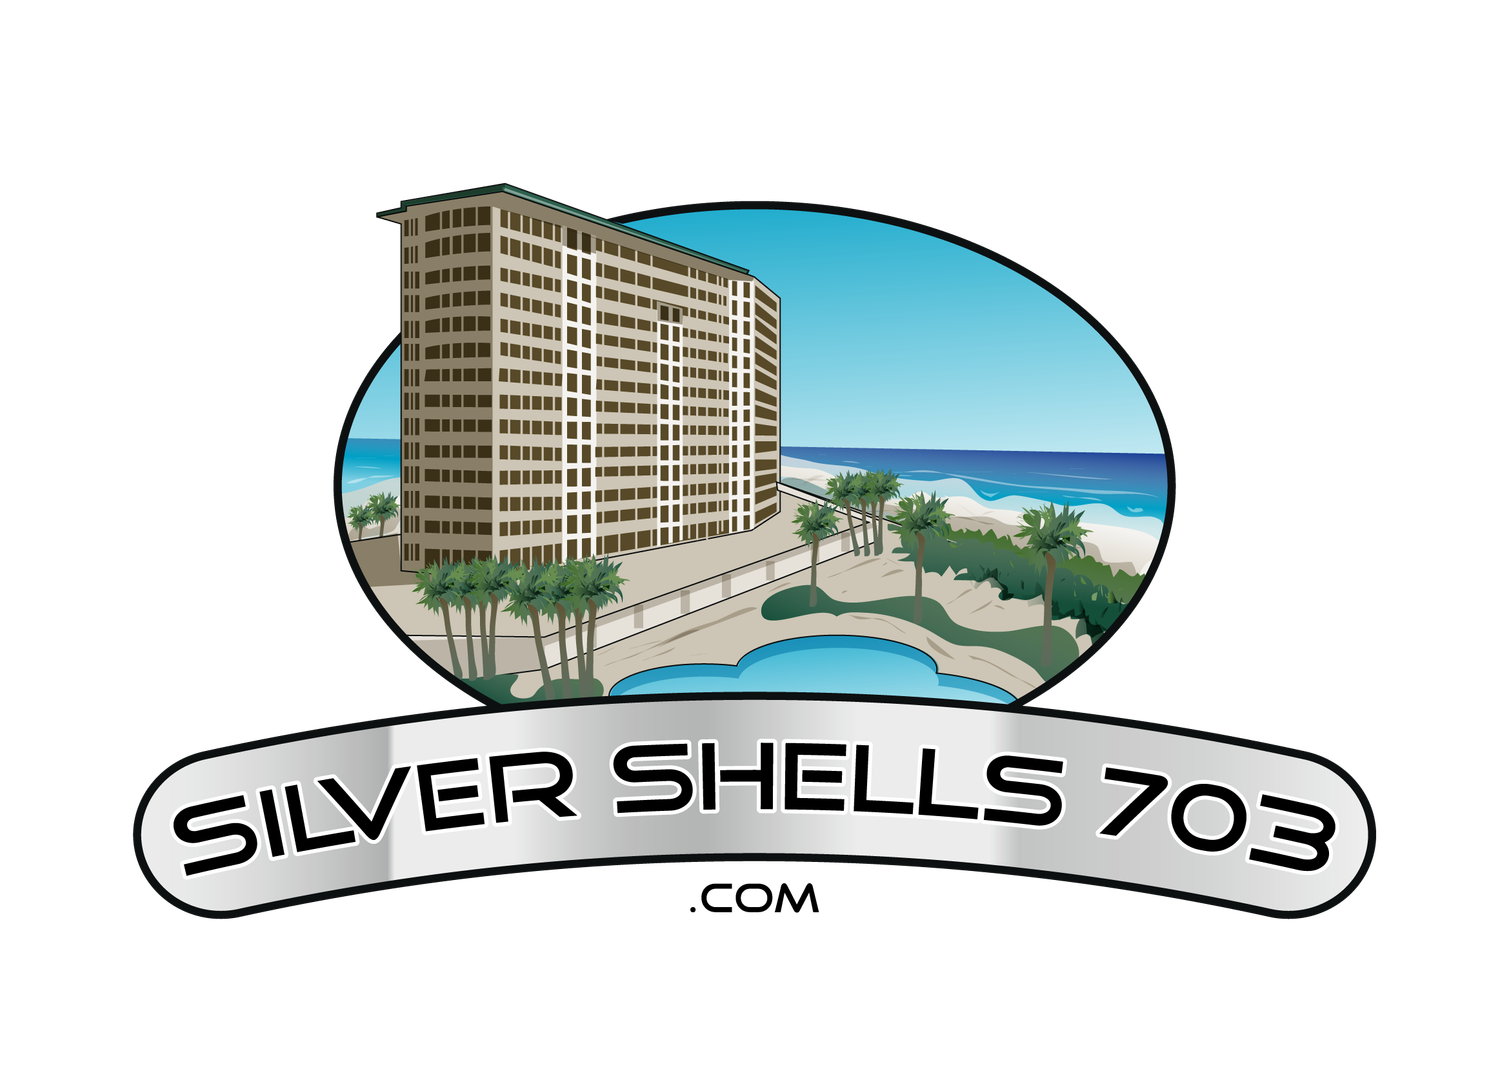 Silver Shells 703